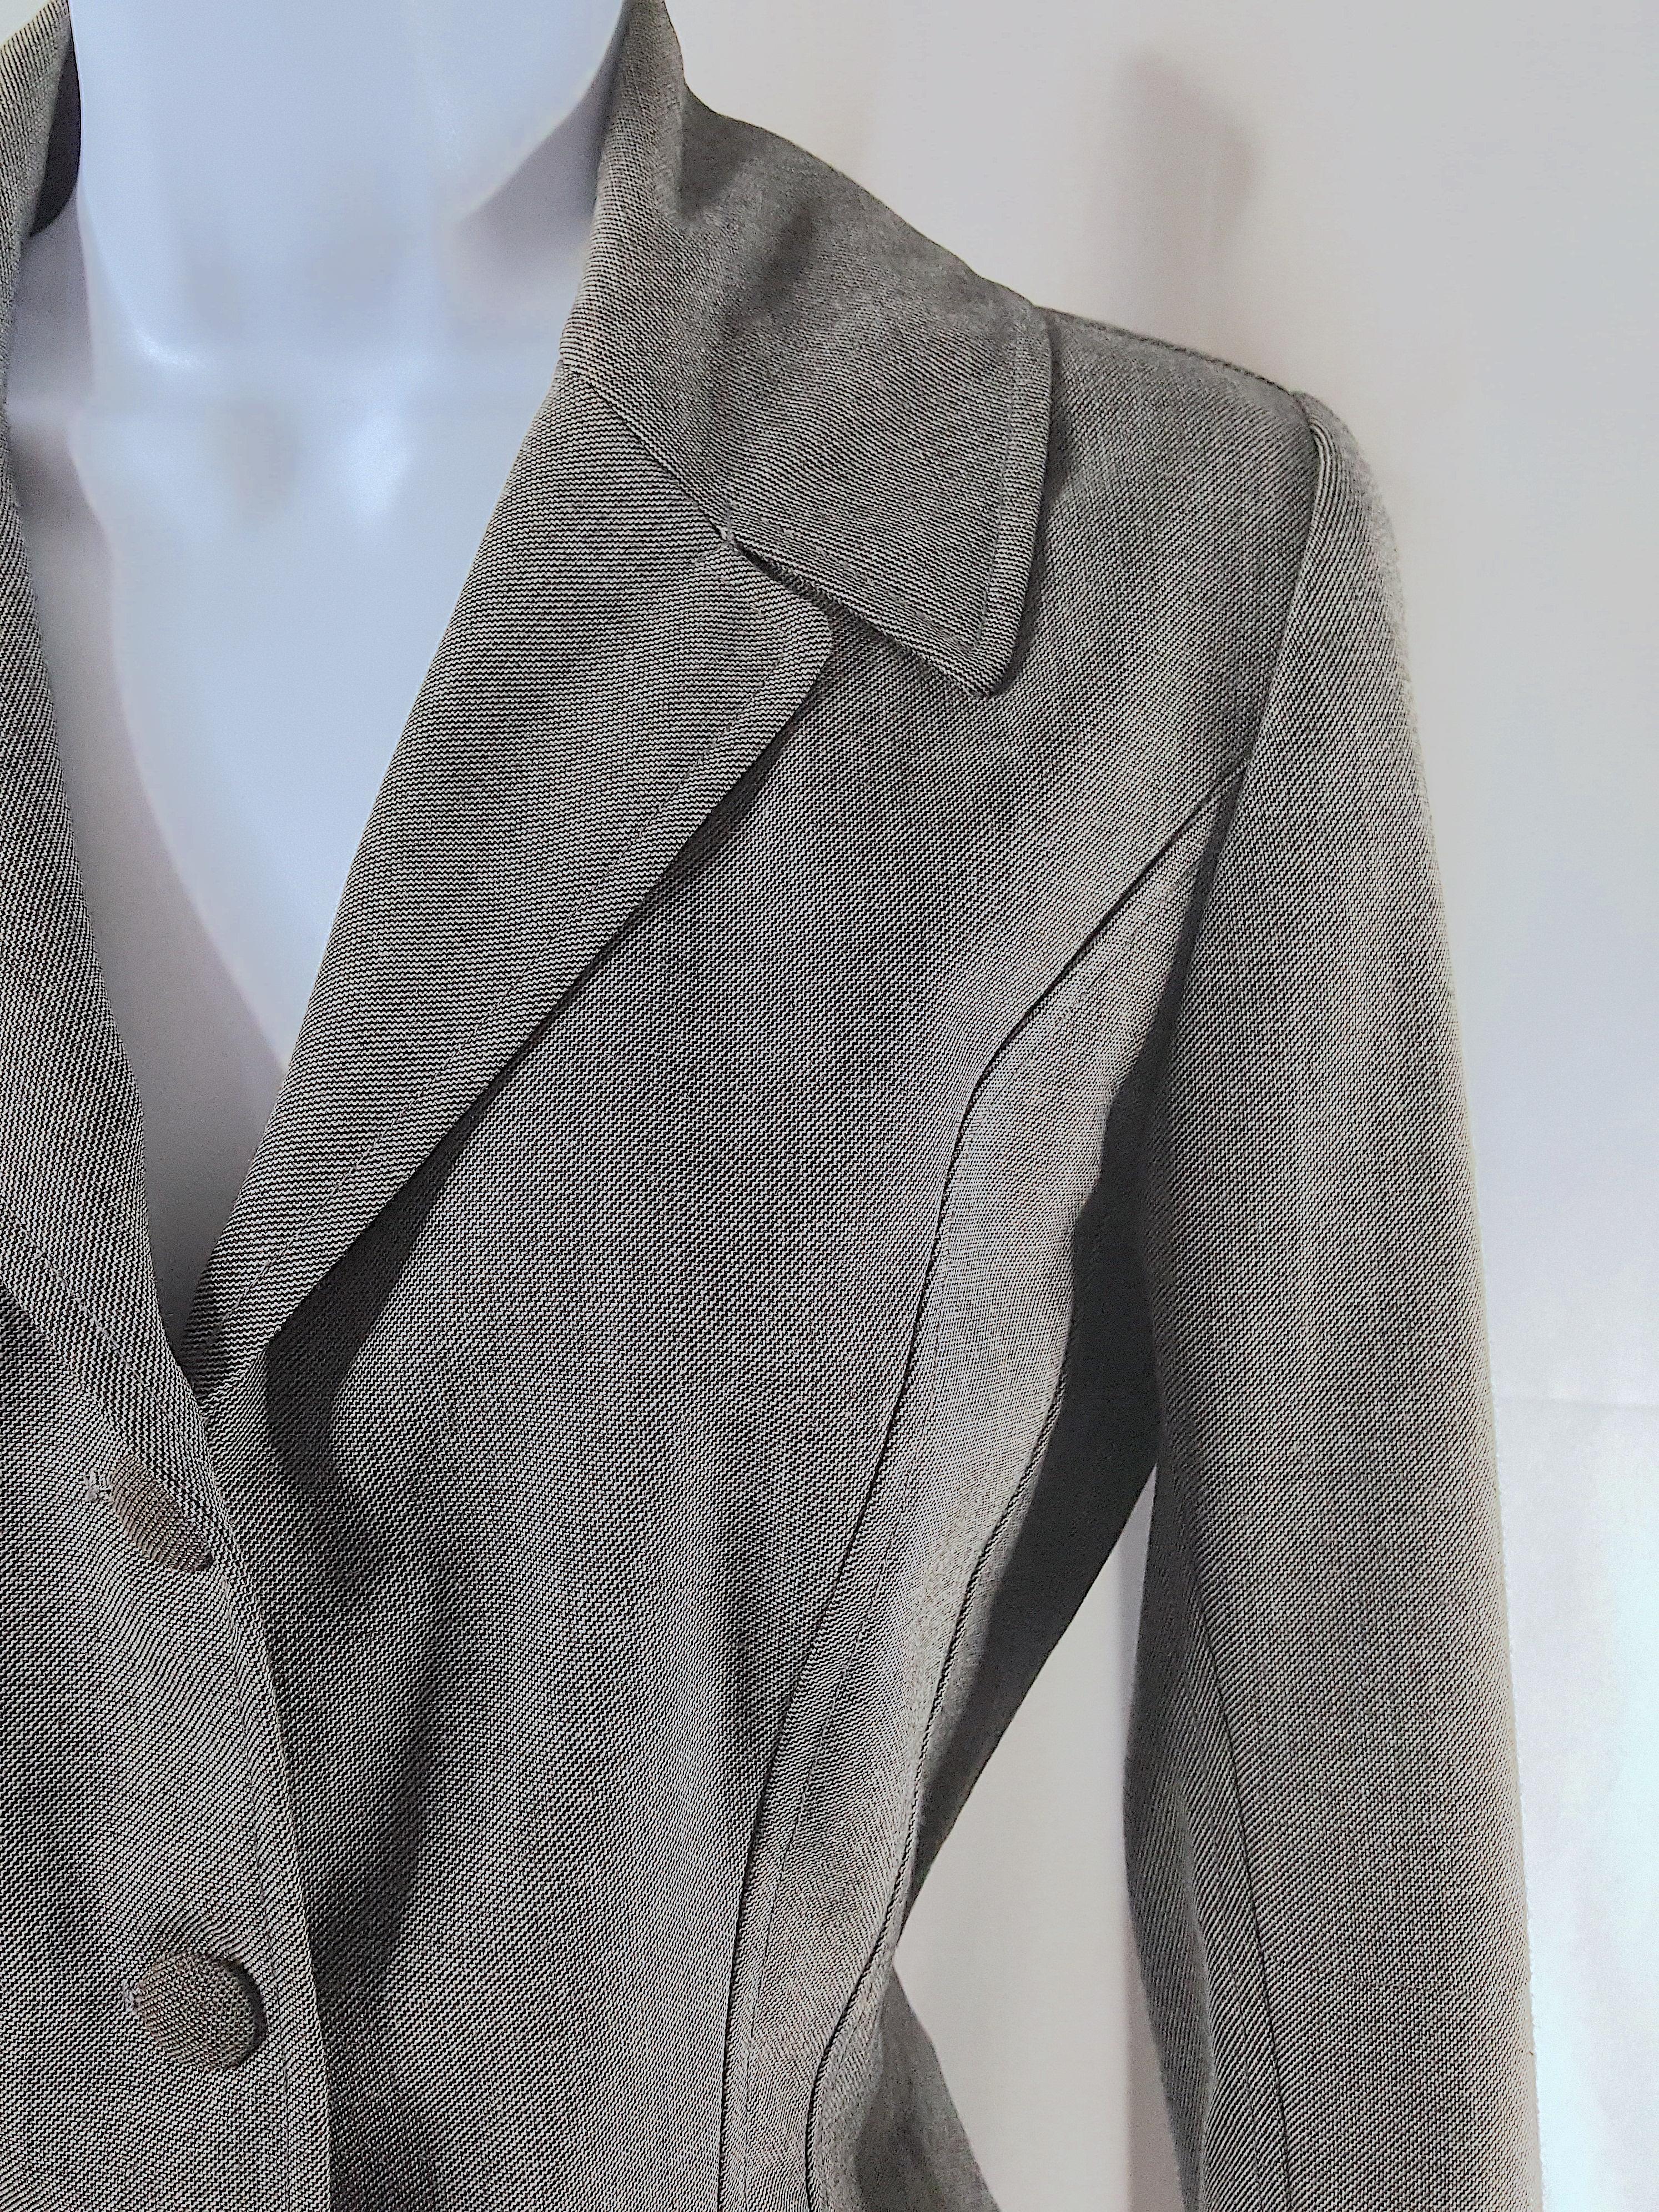 Couture 1990s MartinGrant ParisianAtelier Hourglass DrapedWaist SlitSkirt Suit For Sale 6